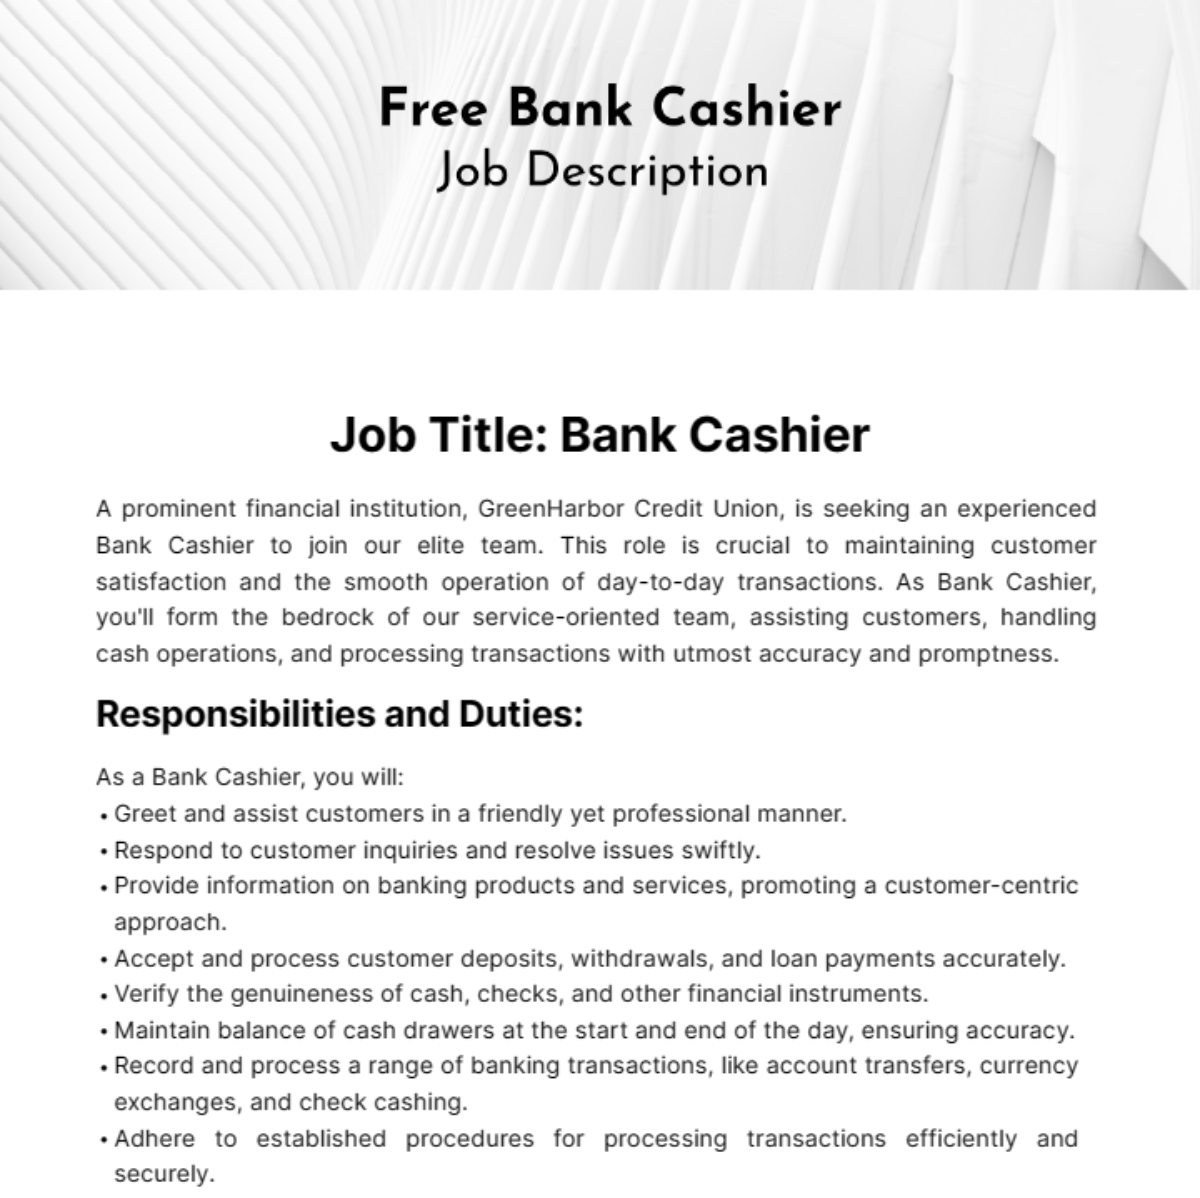 Bank Cashier Job Description Template